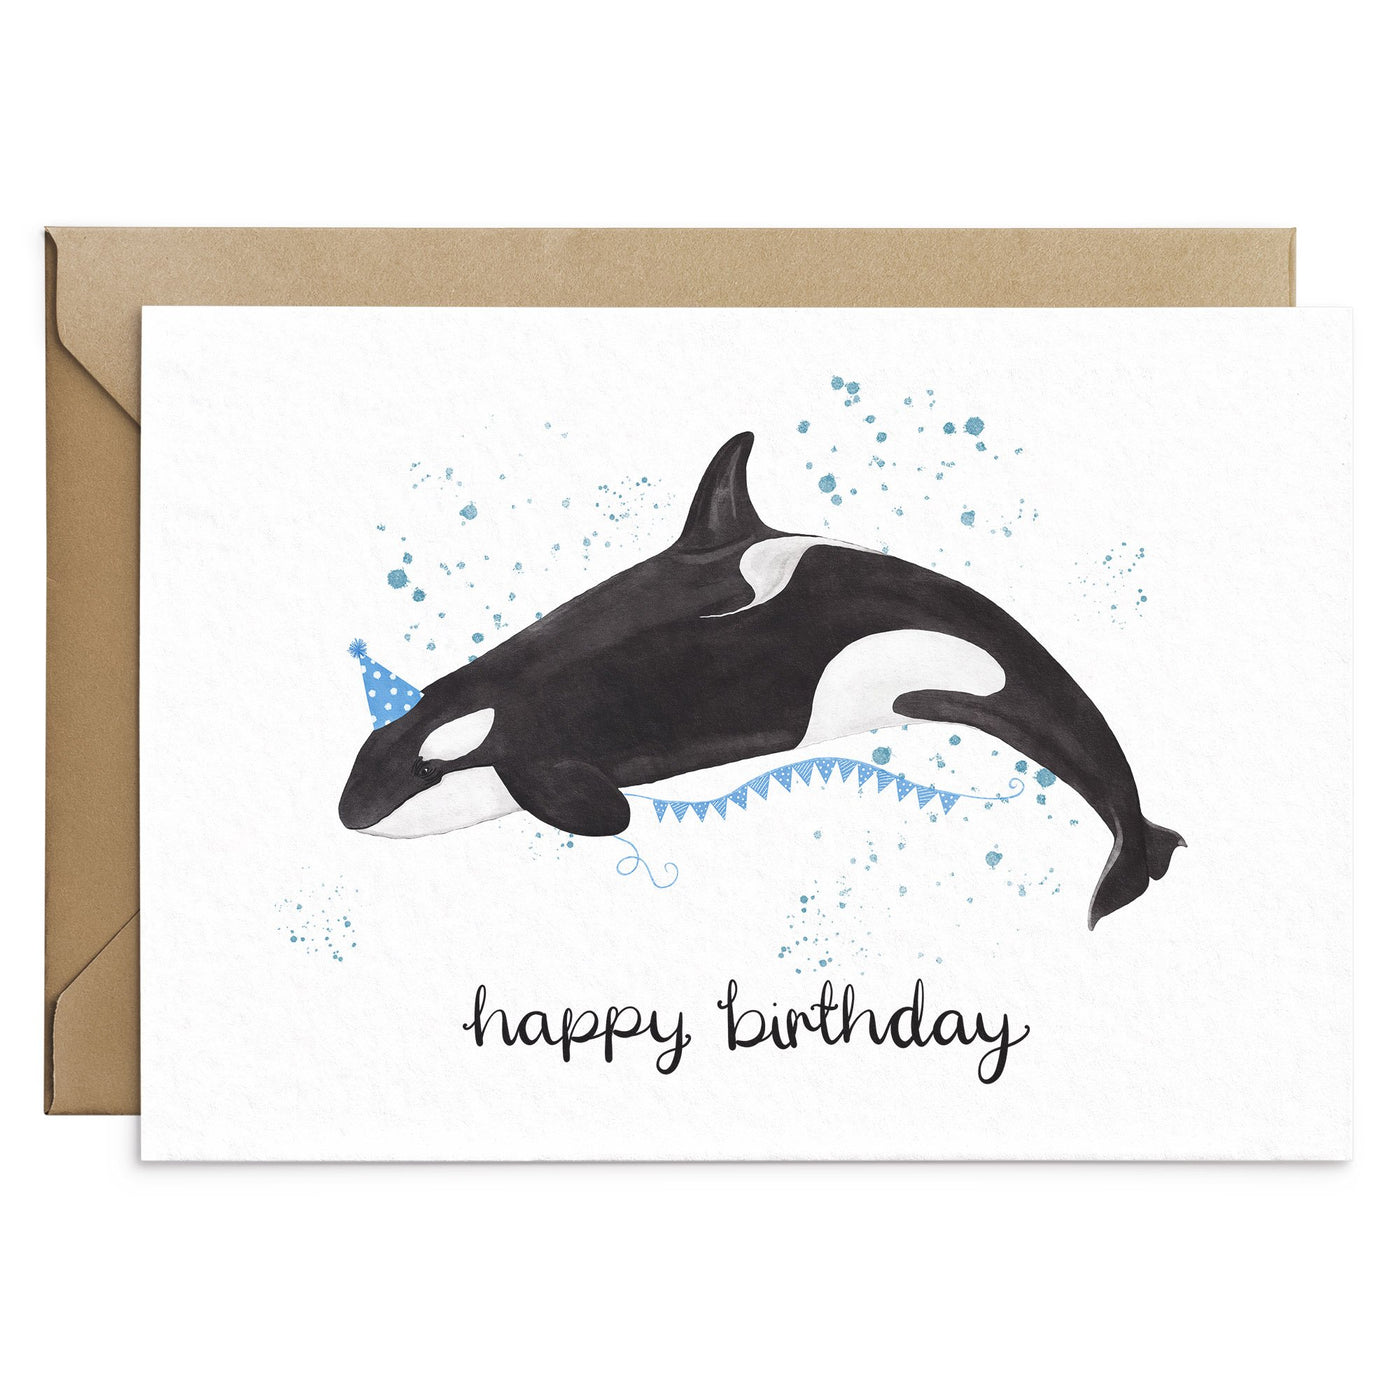 Orca Whale Birthday Card - Poppins & Co.